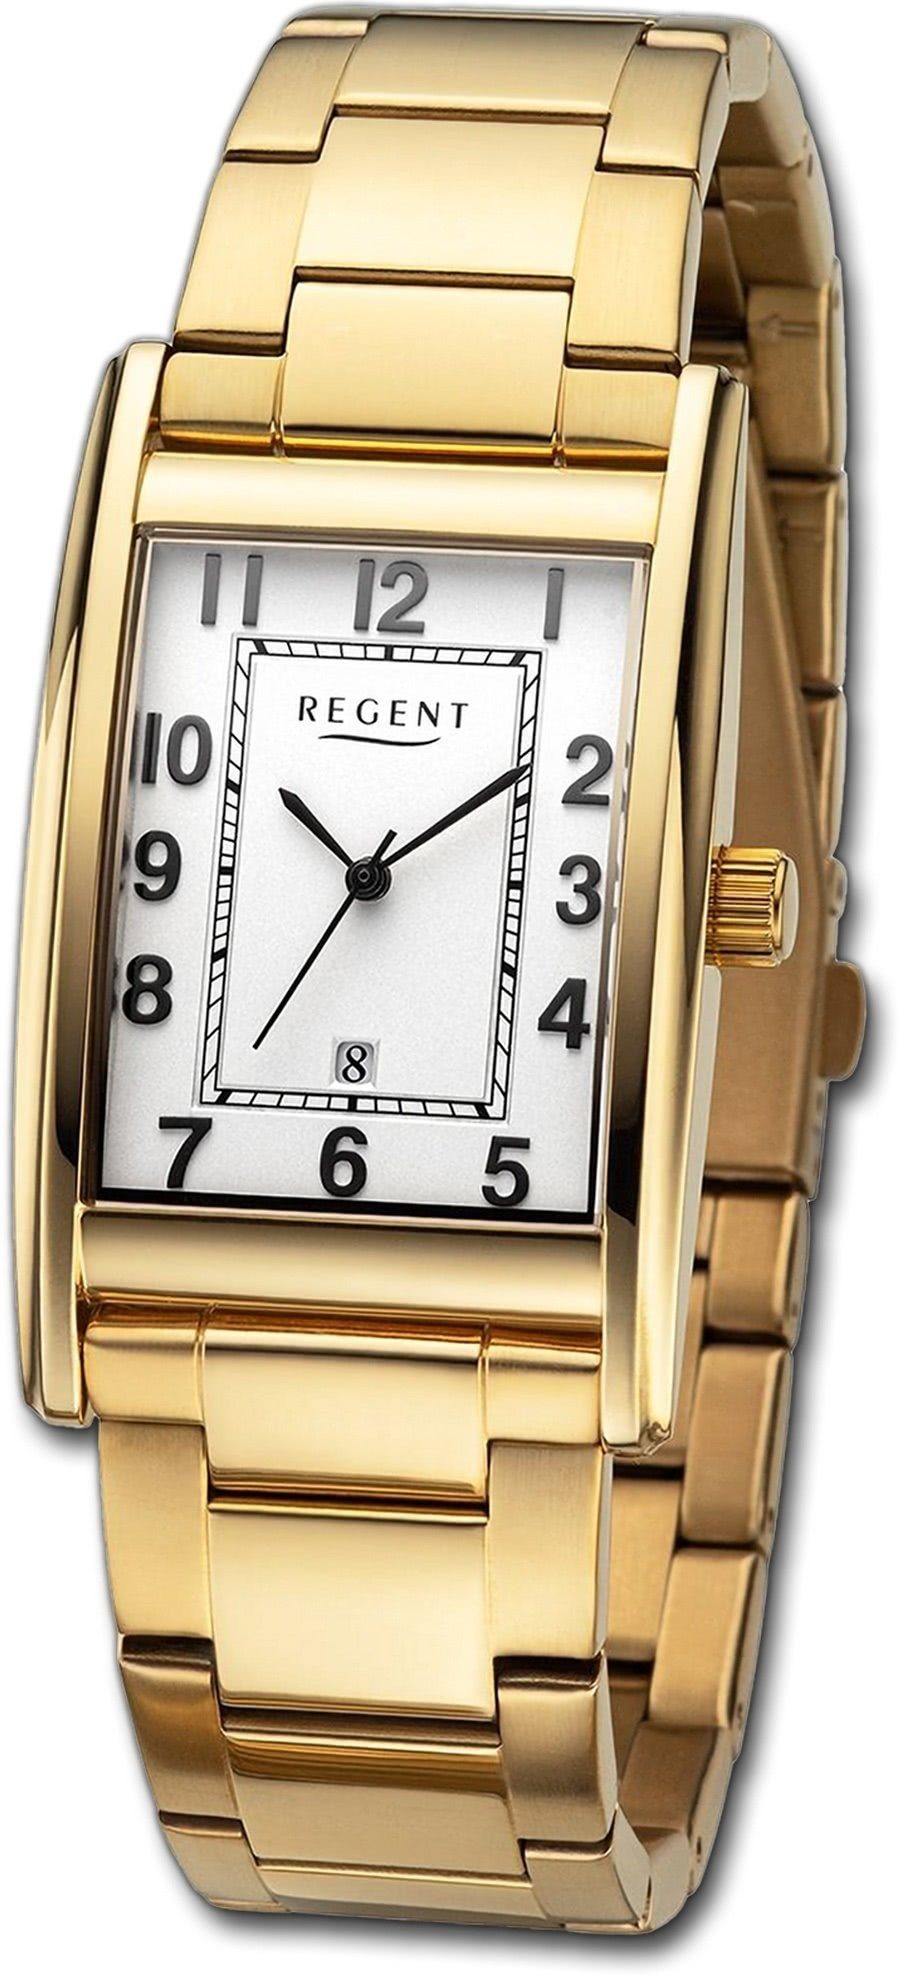 Herren Metallarmband Regent (ca. Quarzuhr 29mm) Gehäuse, Armbanduhr rundes Herrenuhr Analog, extra gold, Regent groß